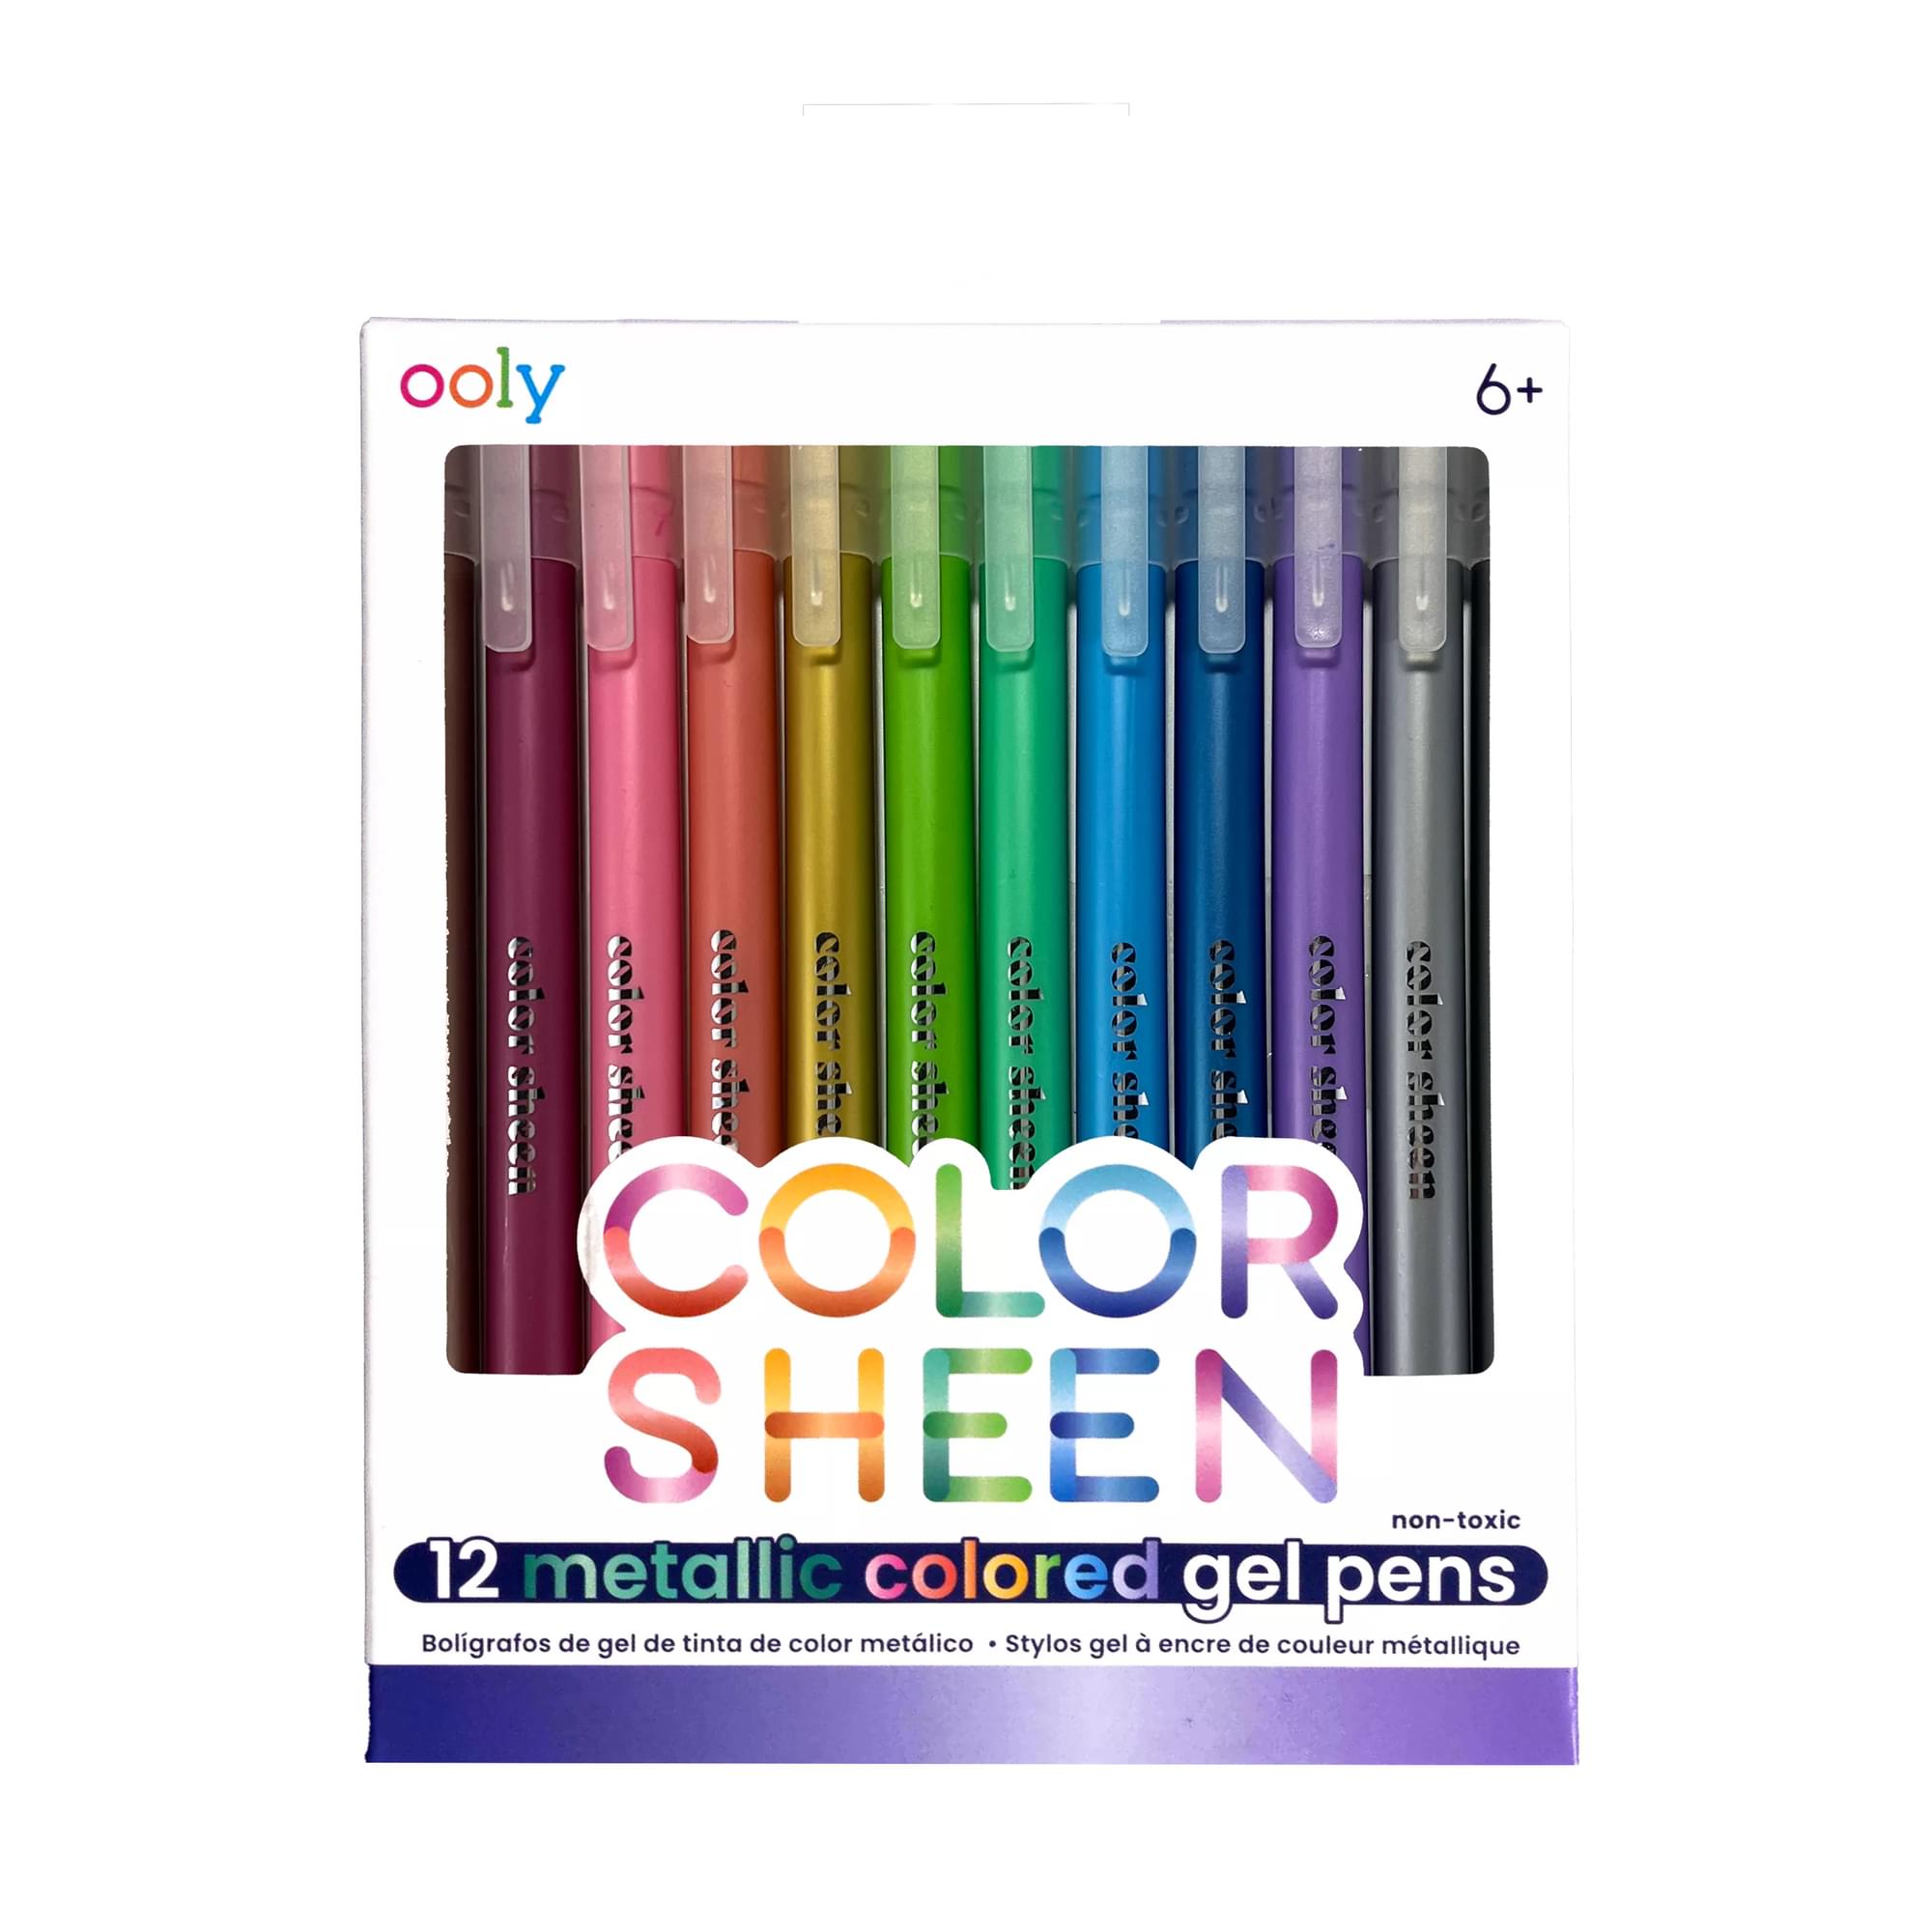 Color Sheen Metallic Colored Gel Pens packaging front